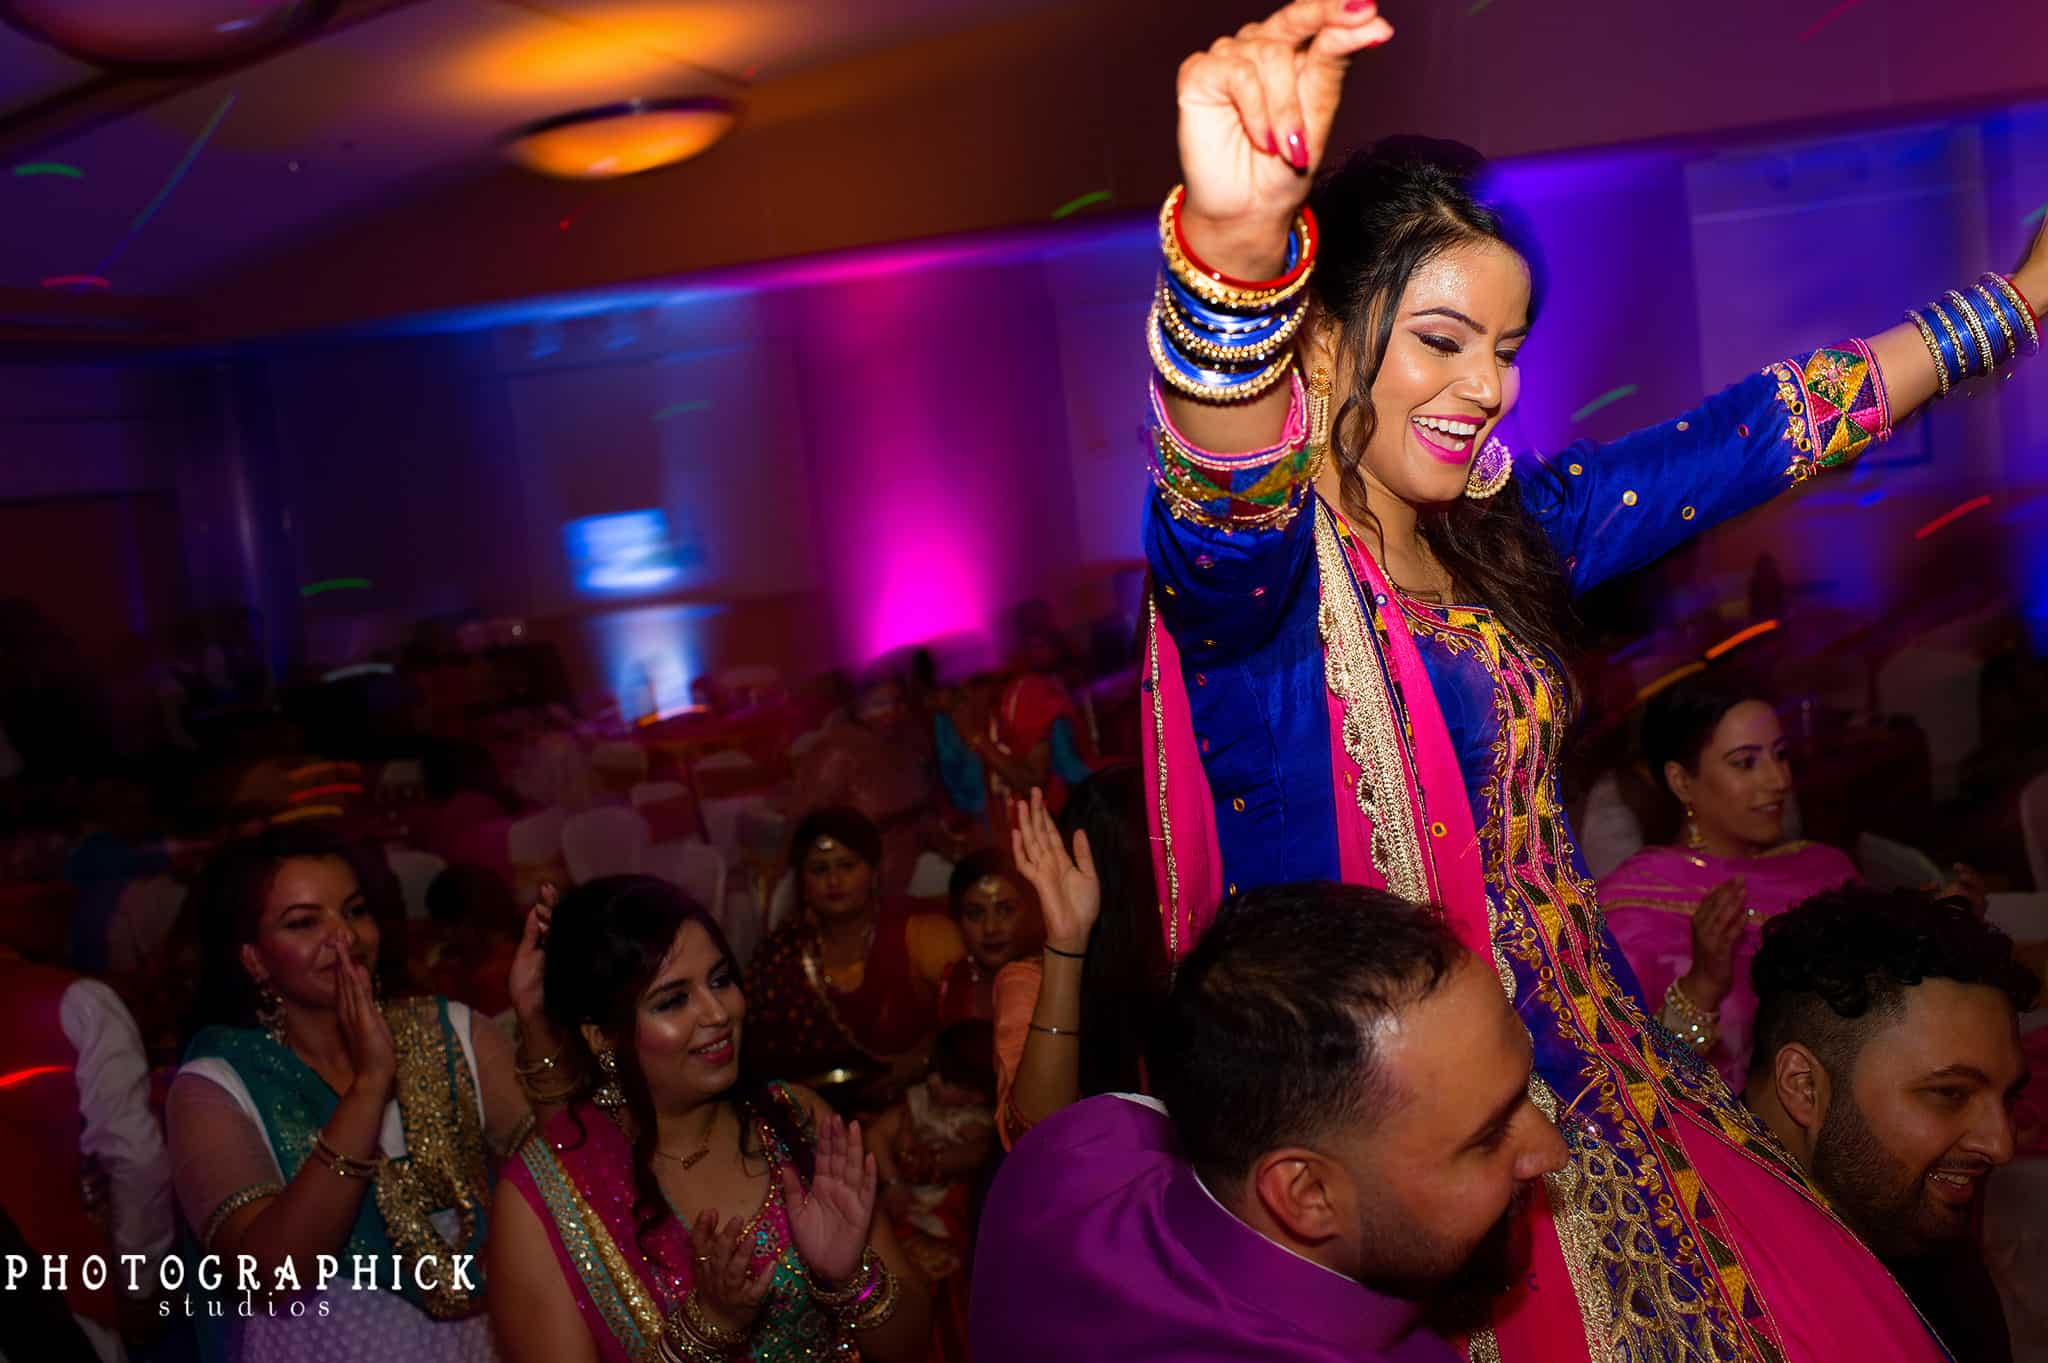 The Bellevue Indian Wedding, Poonam and Ballu: The Bellevue Indian Wedding